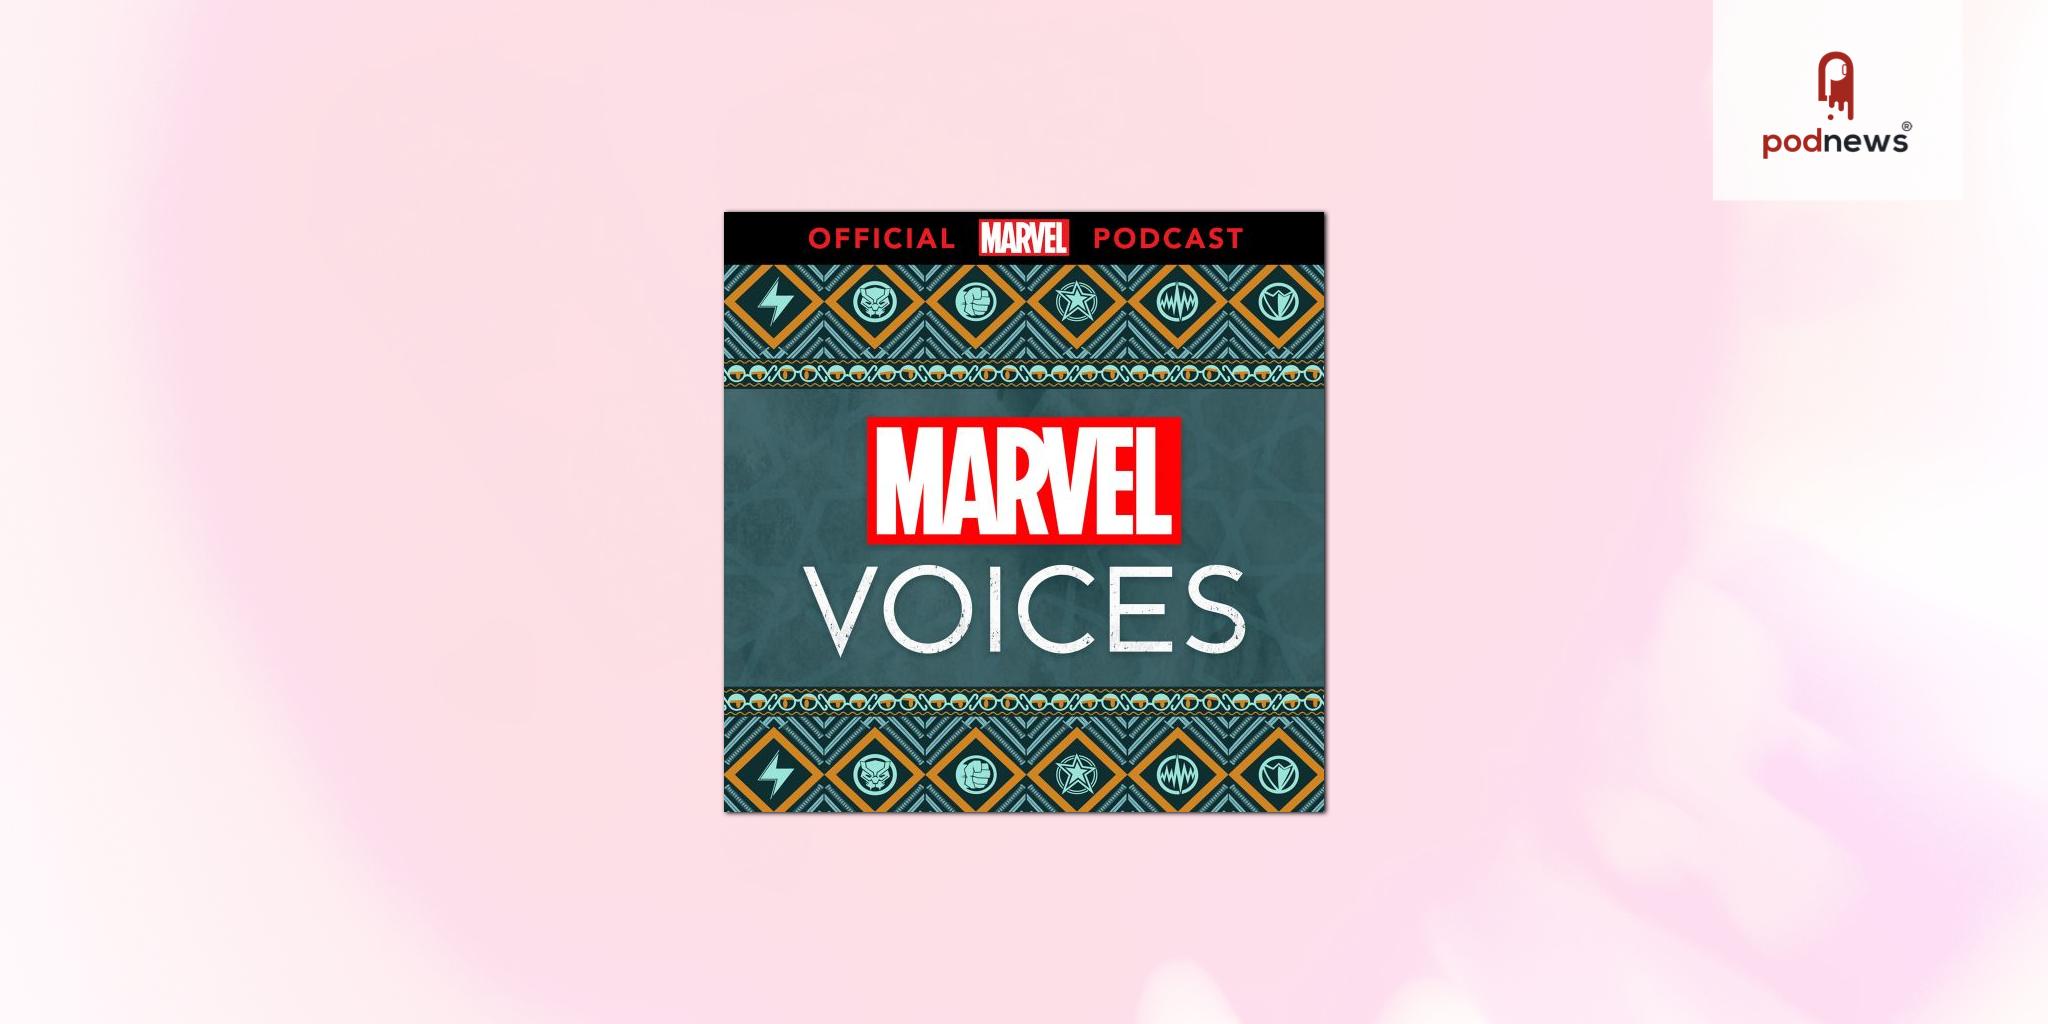 Marvel's Voices returns with a sixth season